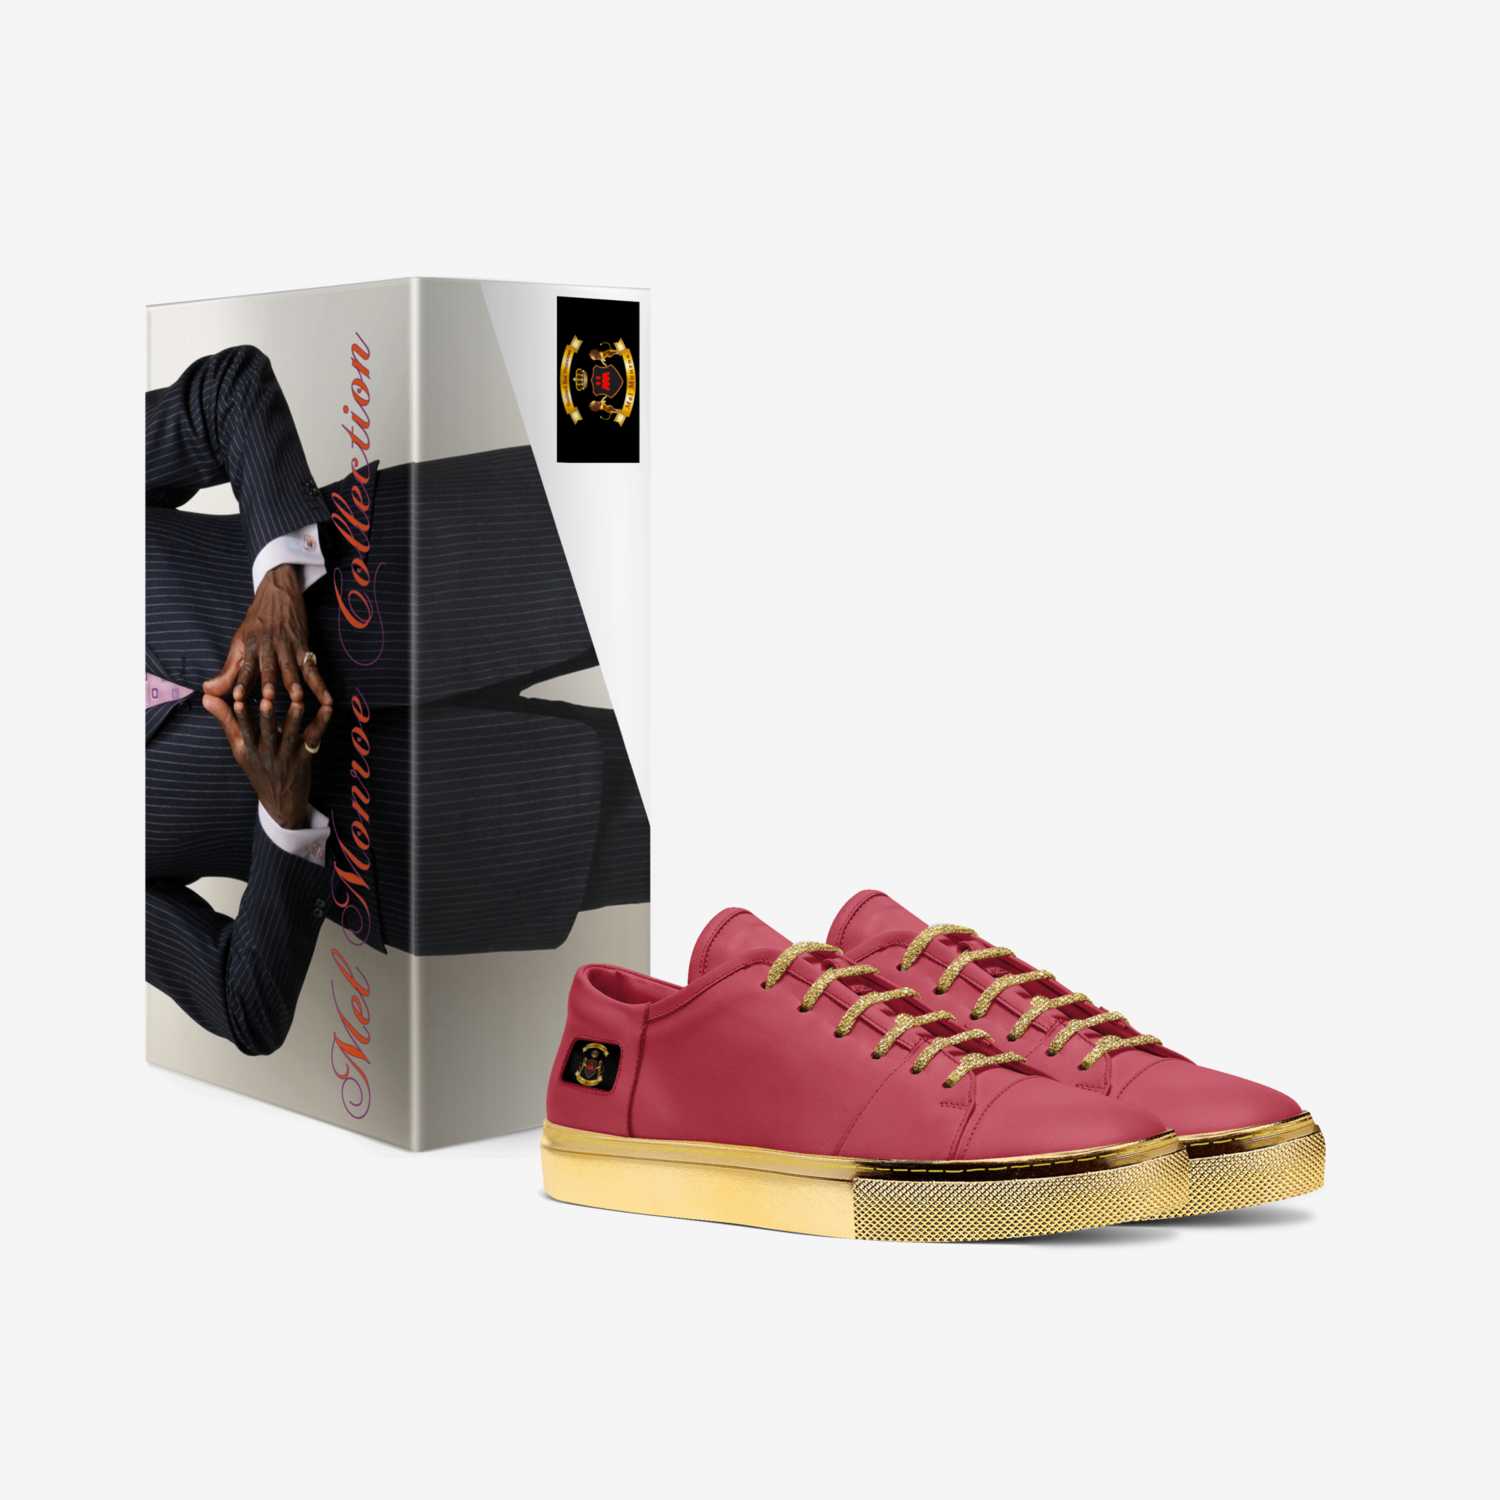 Mel Monroe custom made in Italy shoes by Mel Monroe | Box view